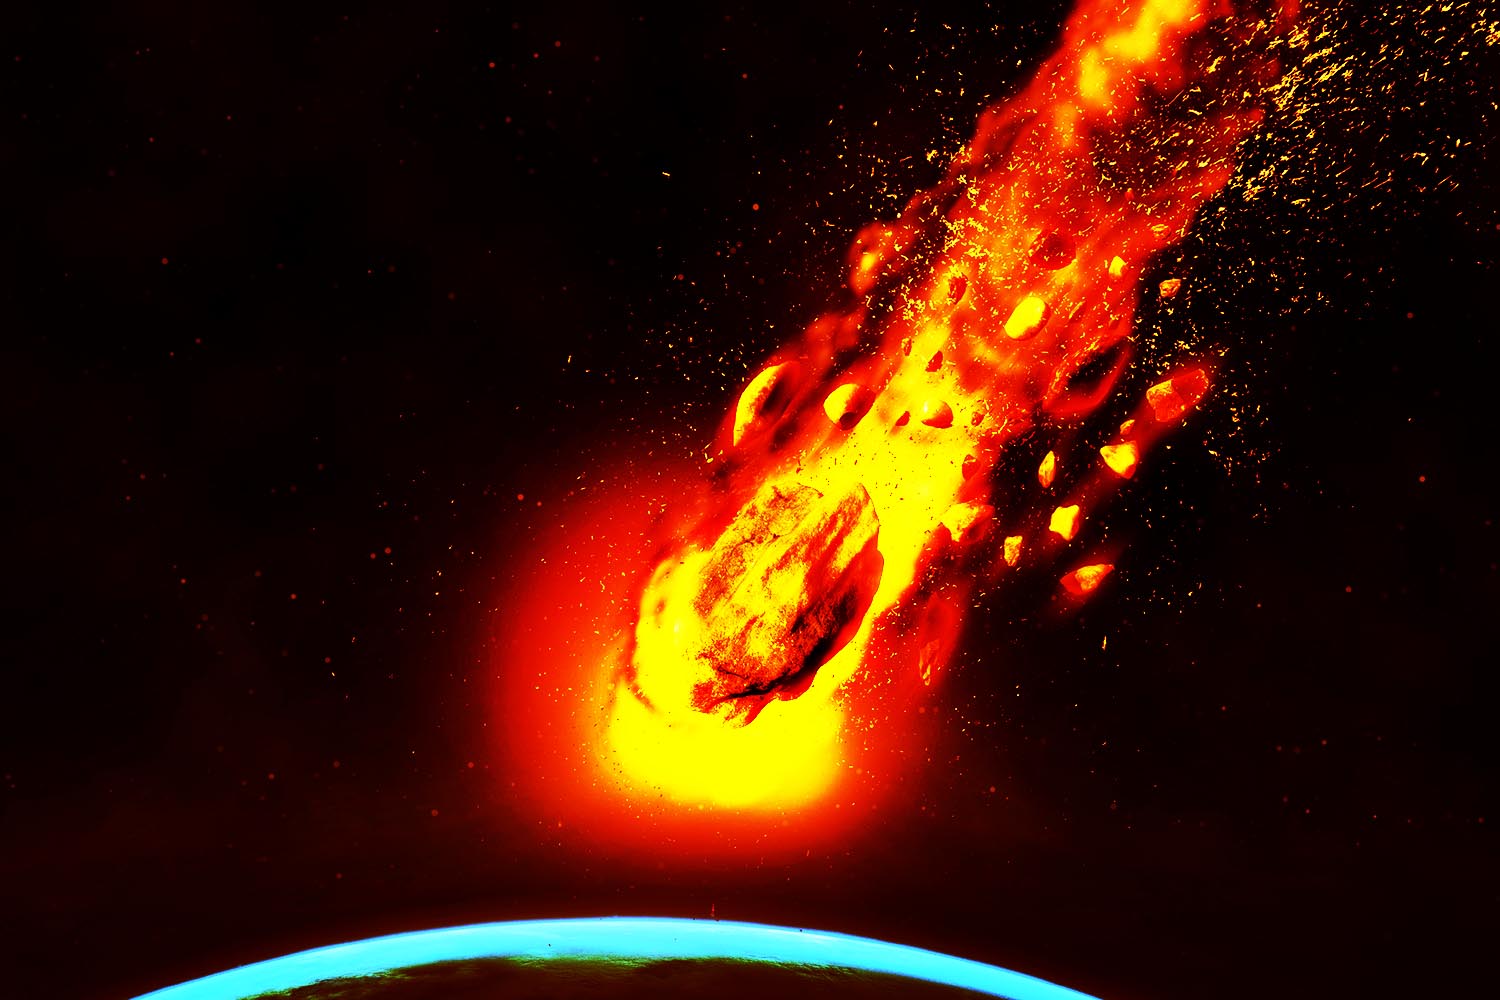 Nasa Asteroid Passing Earth Management And Leadership